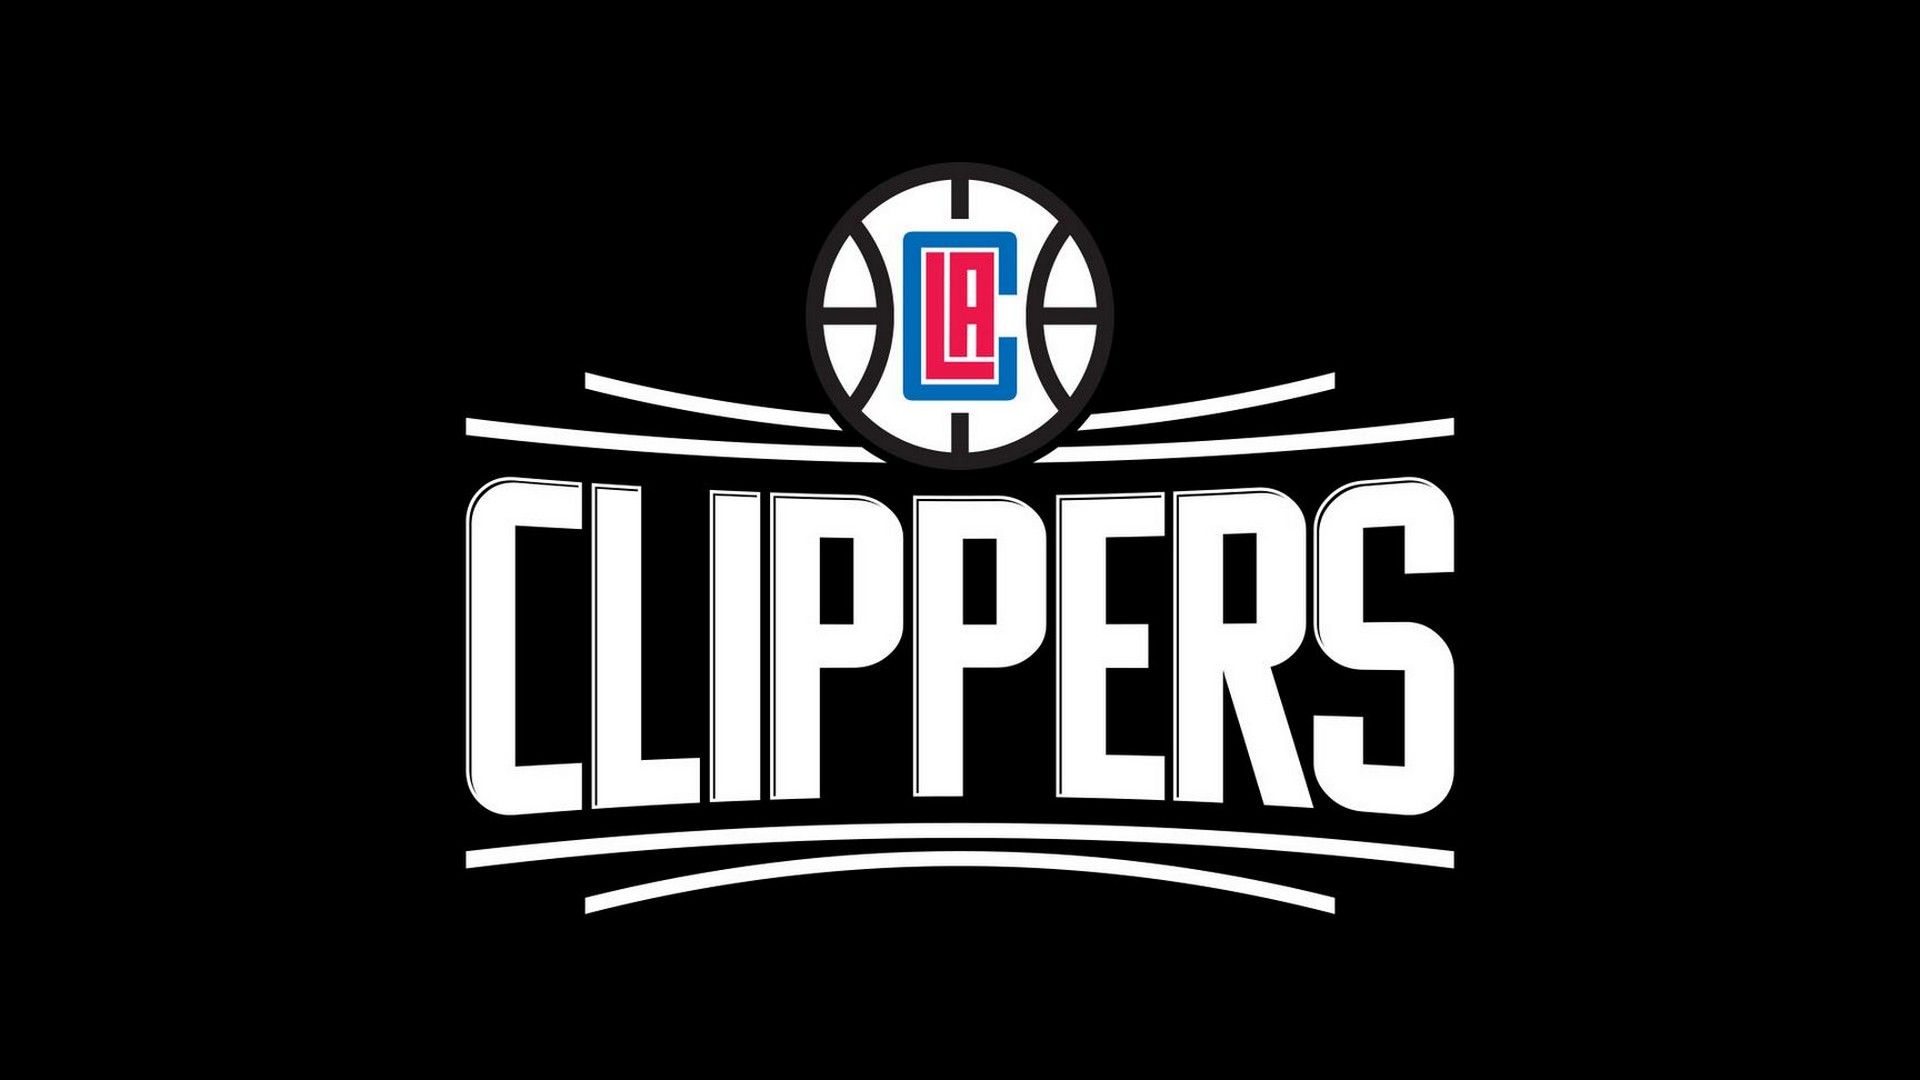 Los Angeles Clippers might loose Kawhi Leonard